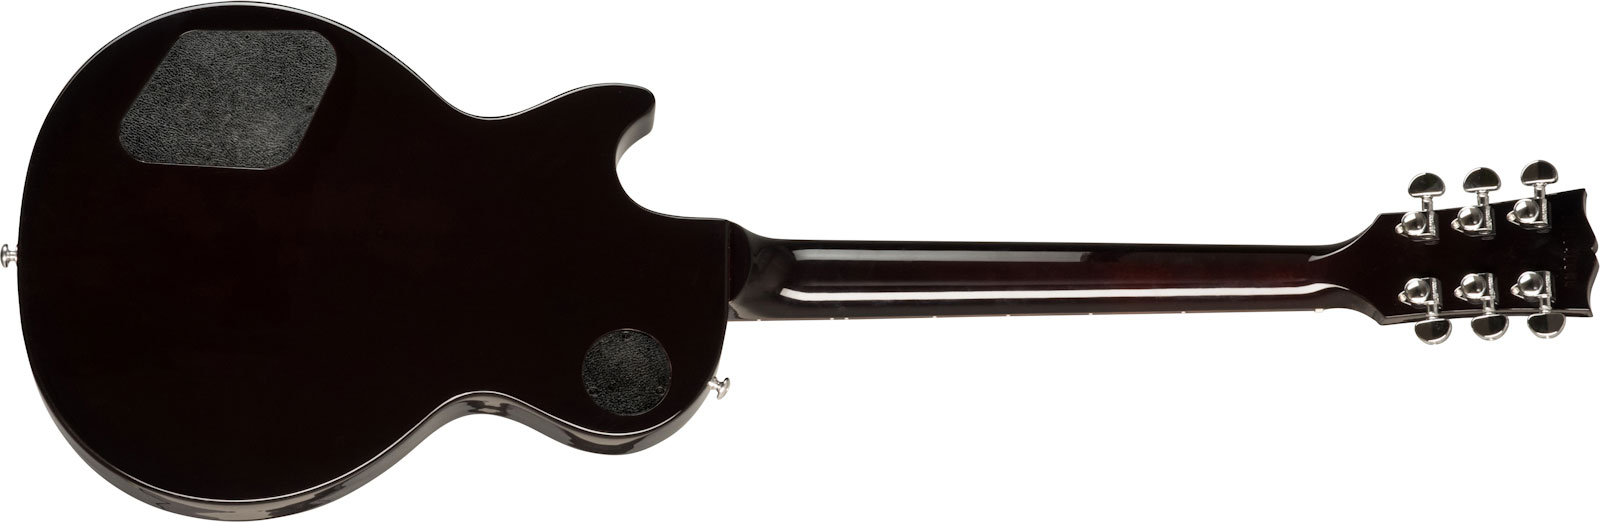 Gibson Les Paul Studio Modern 2h Ht Rw - Smokehouse Burst - Single cut electric guitar - Variation 1